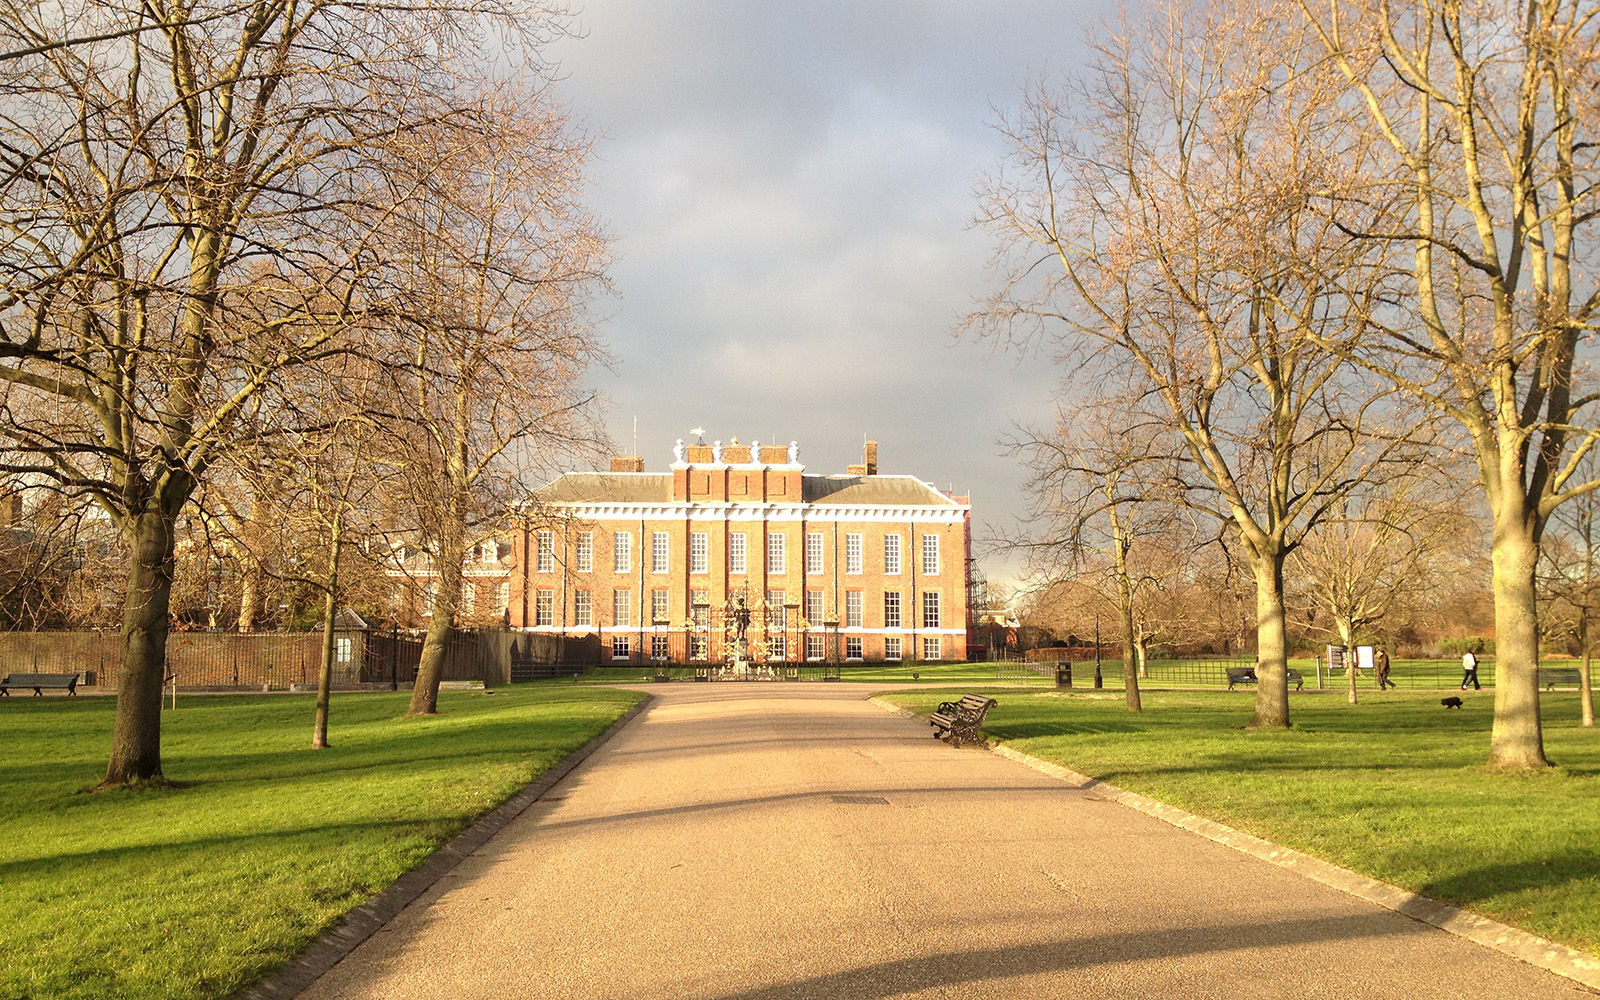 Kensington Palace, 20 January 2016